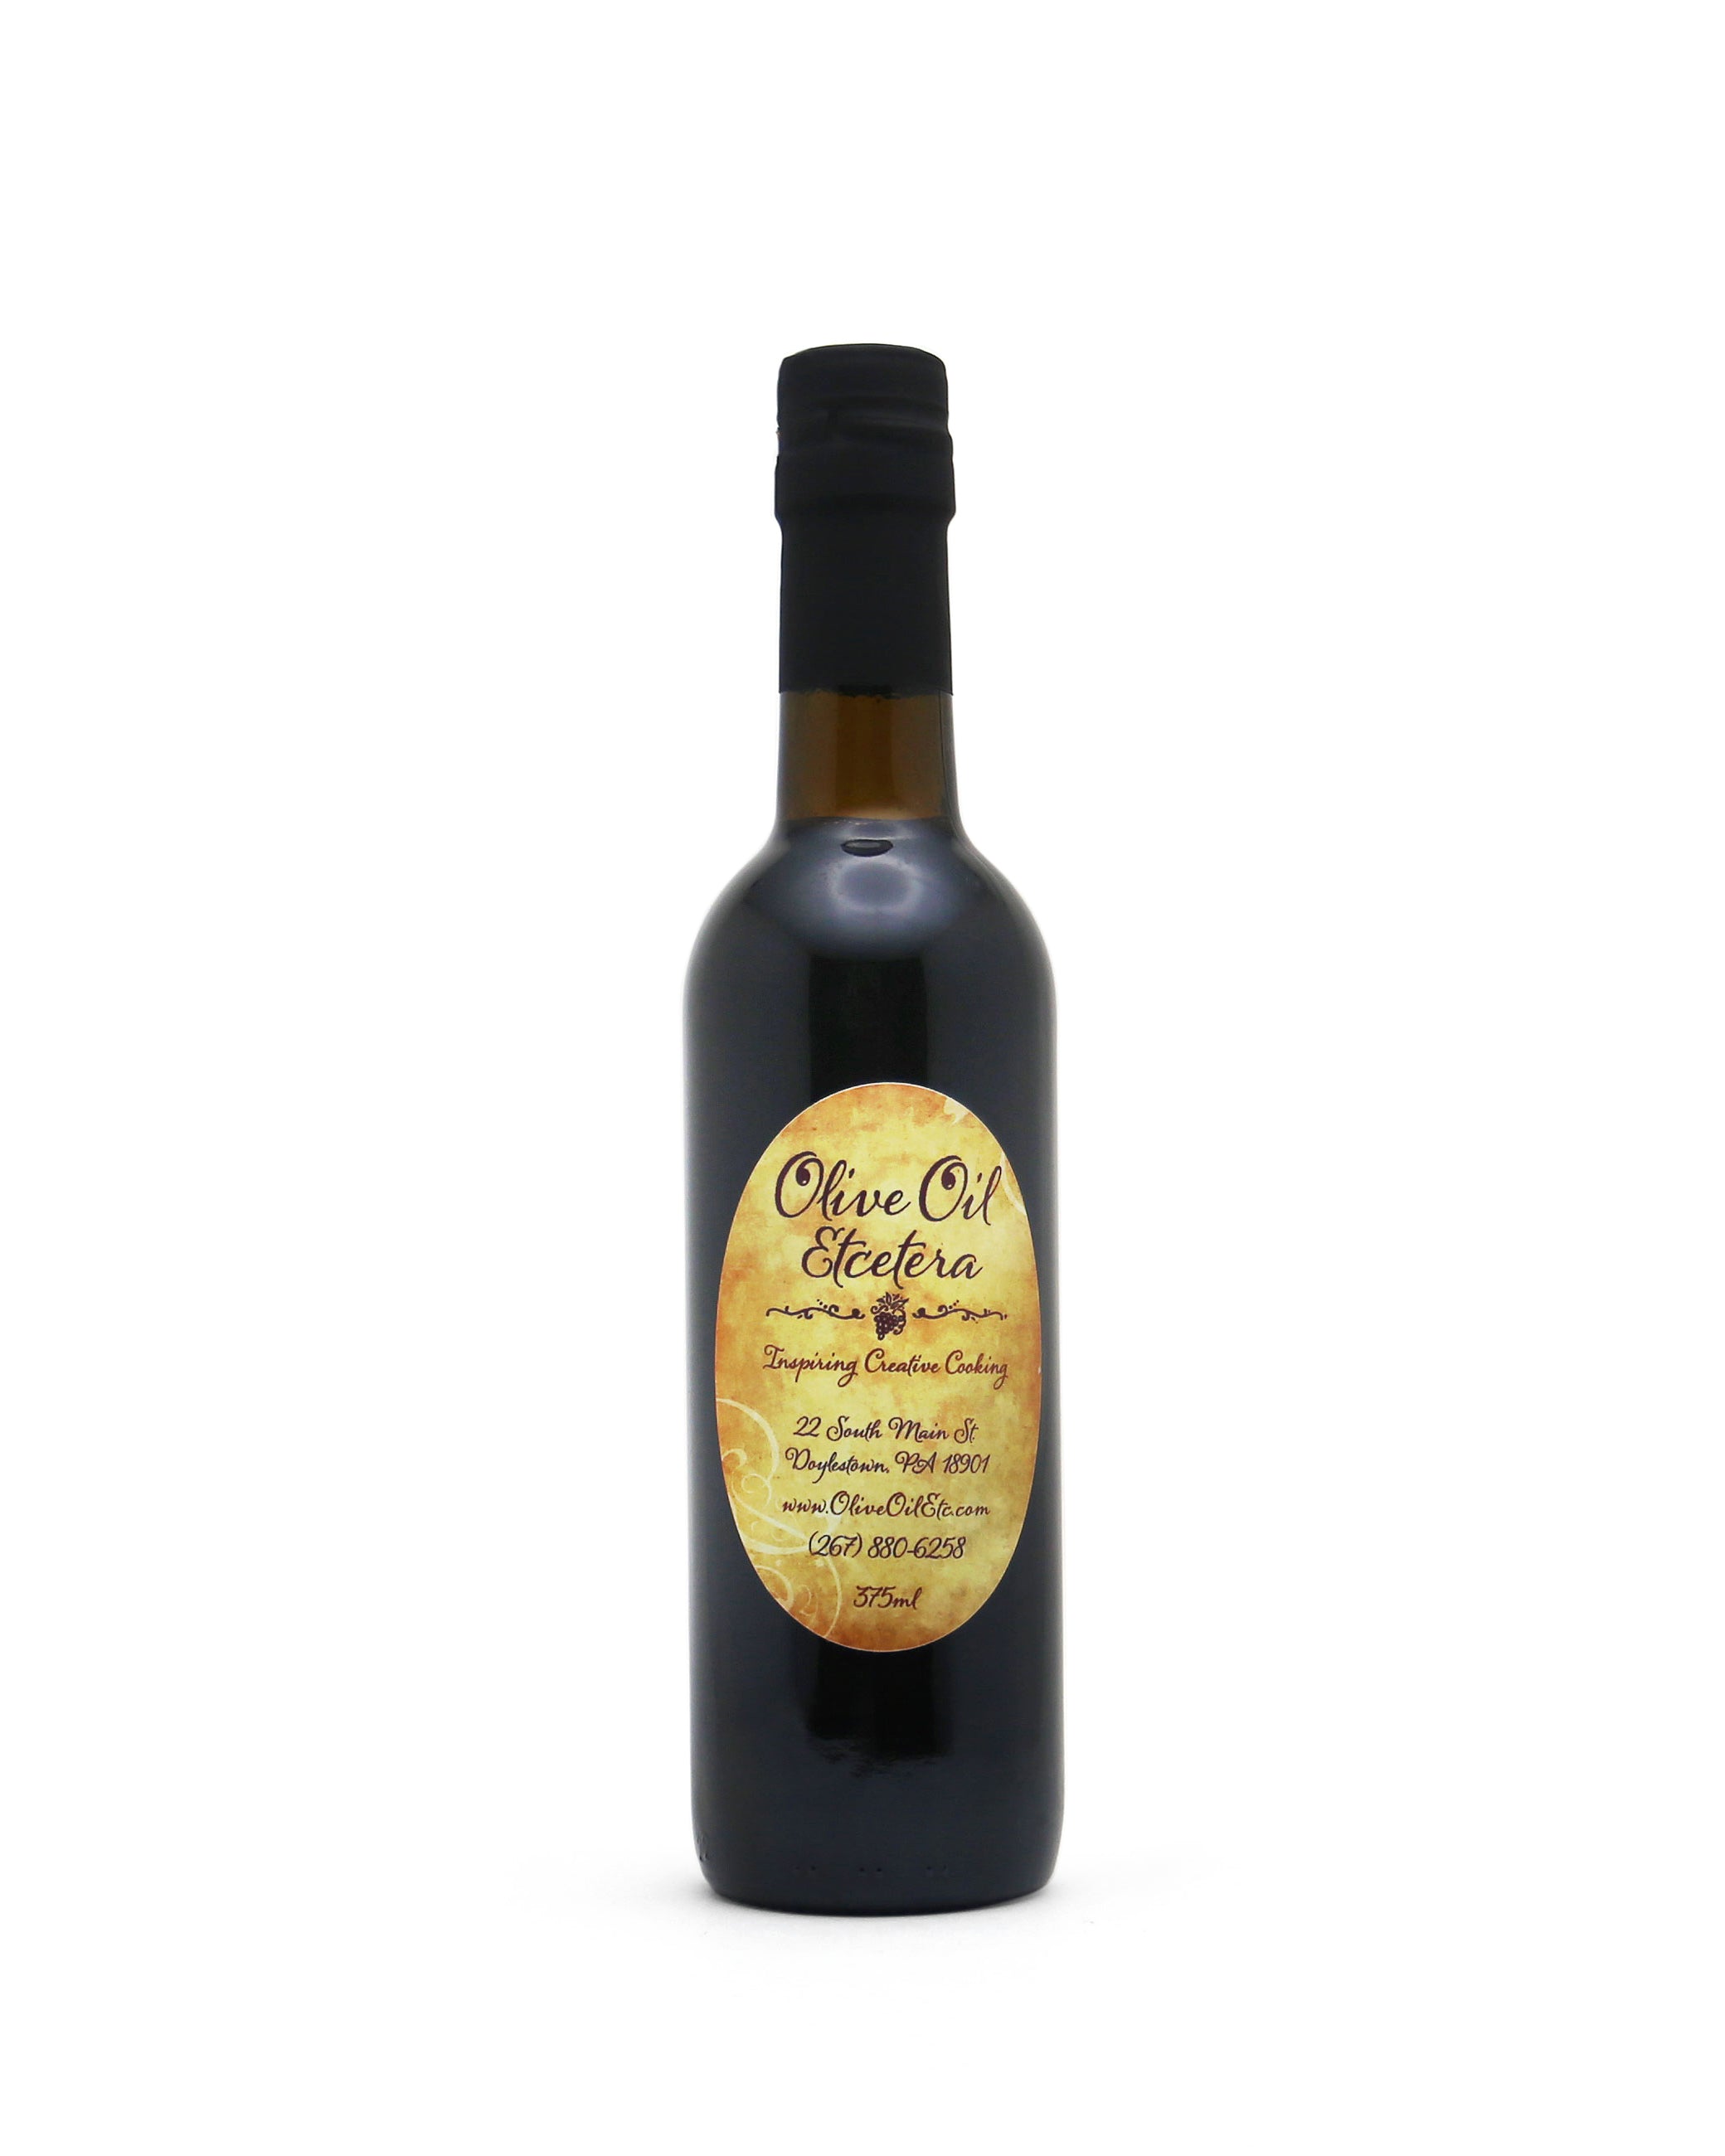 Strawberry Balsamic Vinegar - Olive Oil Etcetera - Bucks county's gourmet olive oil and vinegar shop